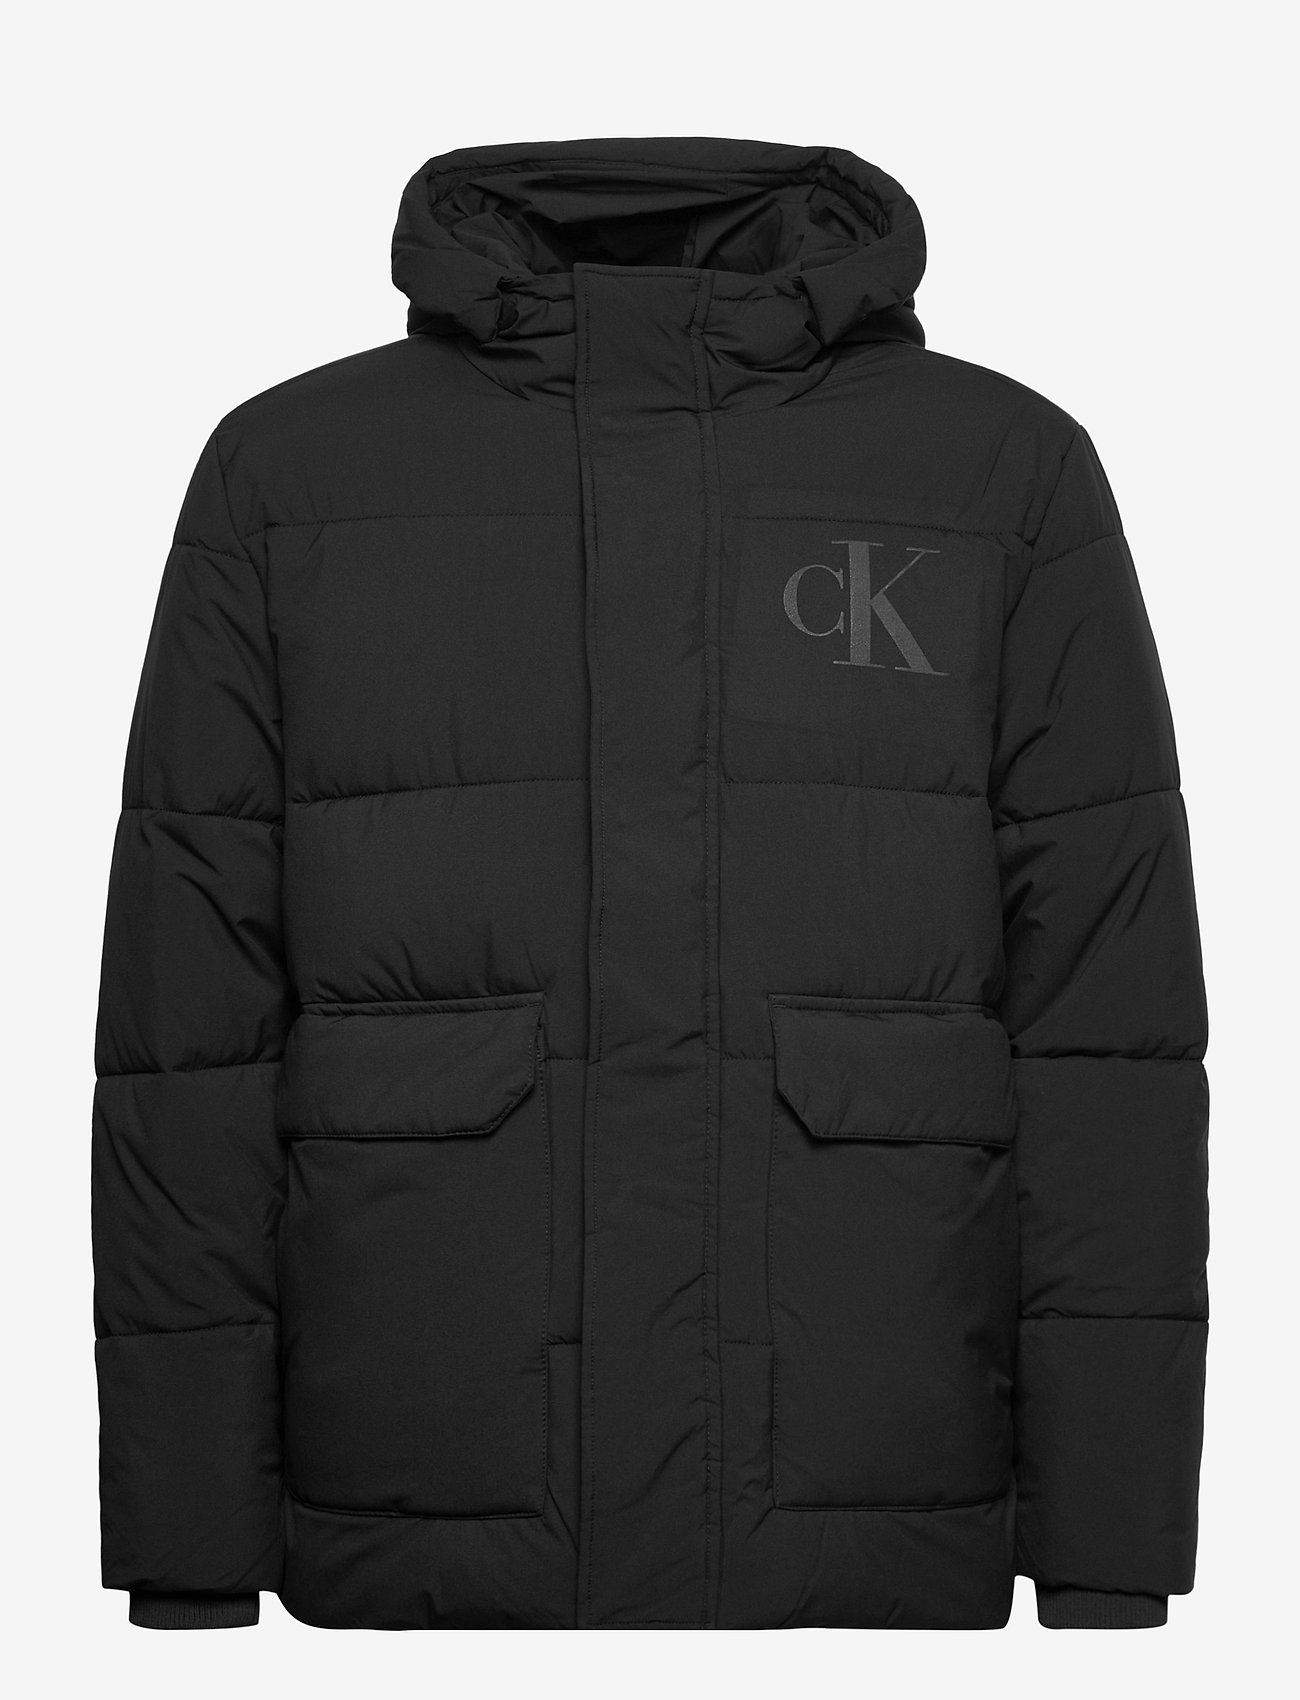 Calvin Klein Jeans Ck Eco Jacket (Ck Black) - 1920 kr | Boozt.com